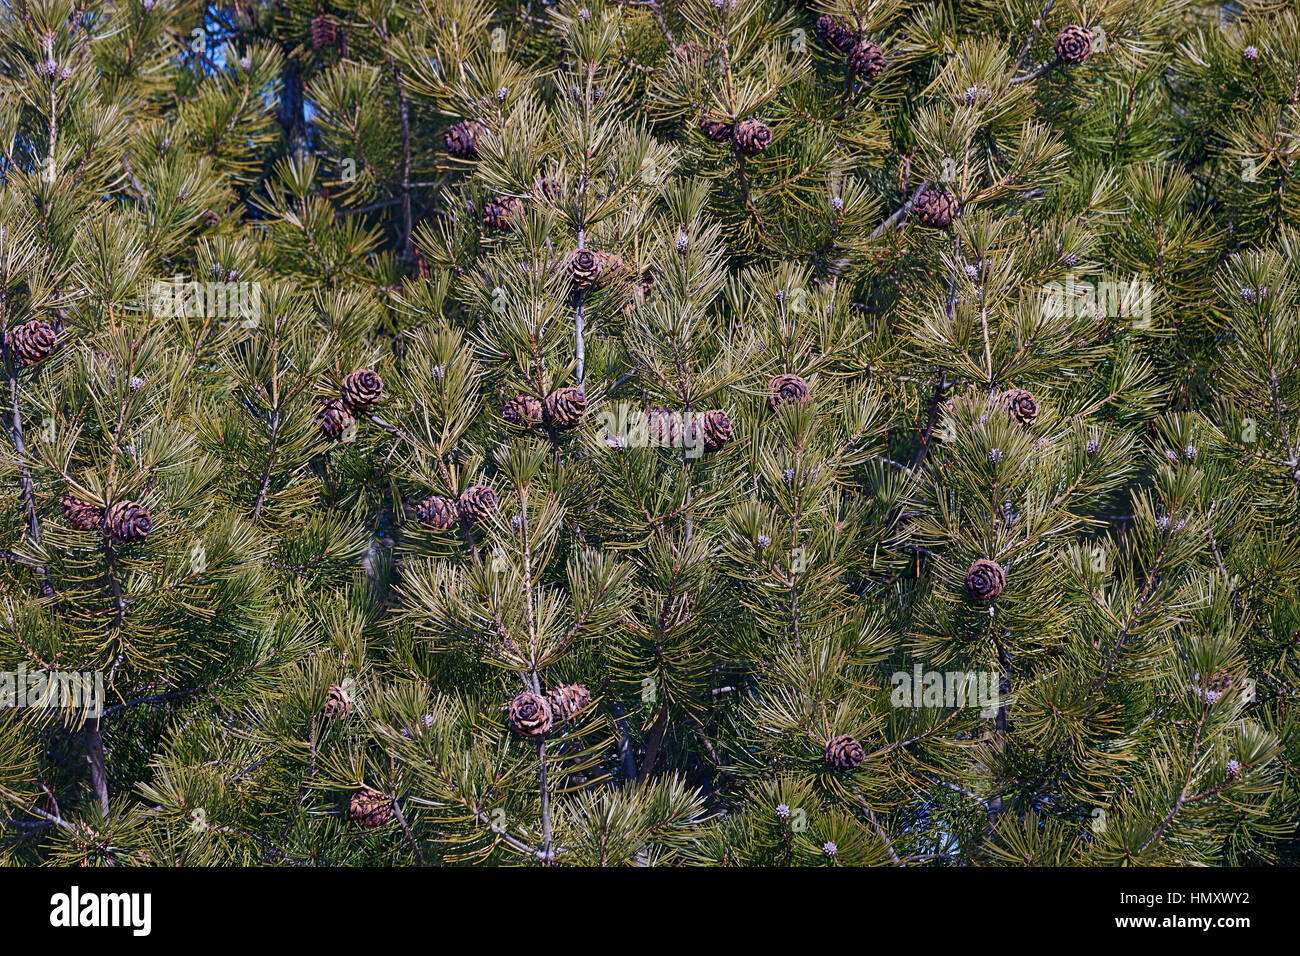 Lace-bark pine (Pinus bungeana). Tree with cones Stock Photo